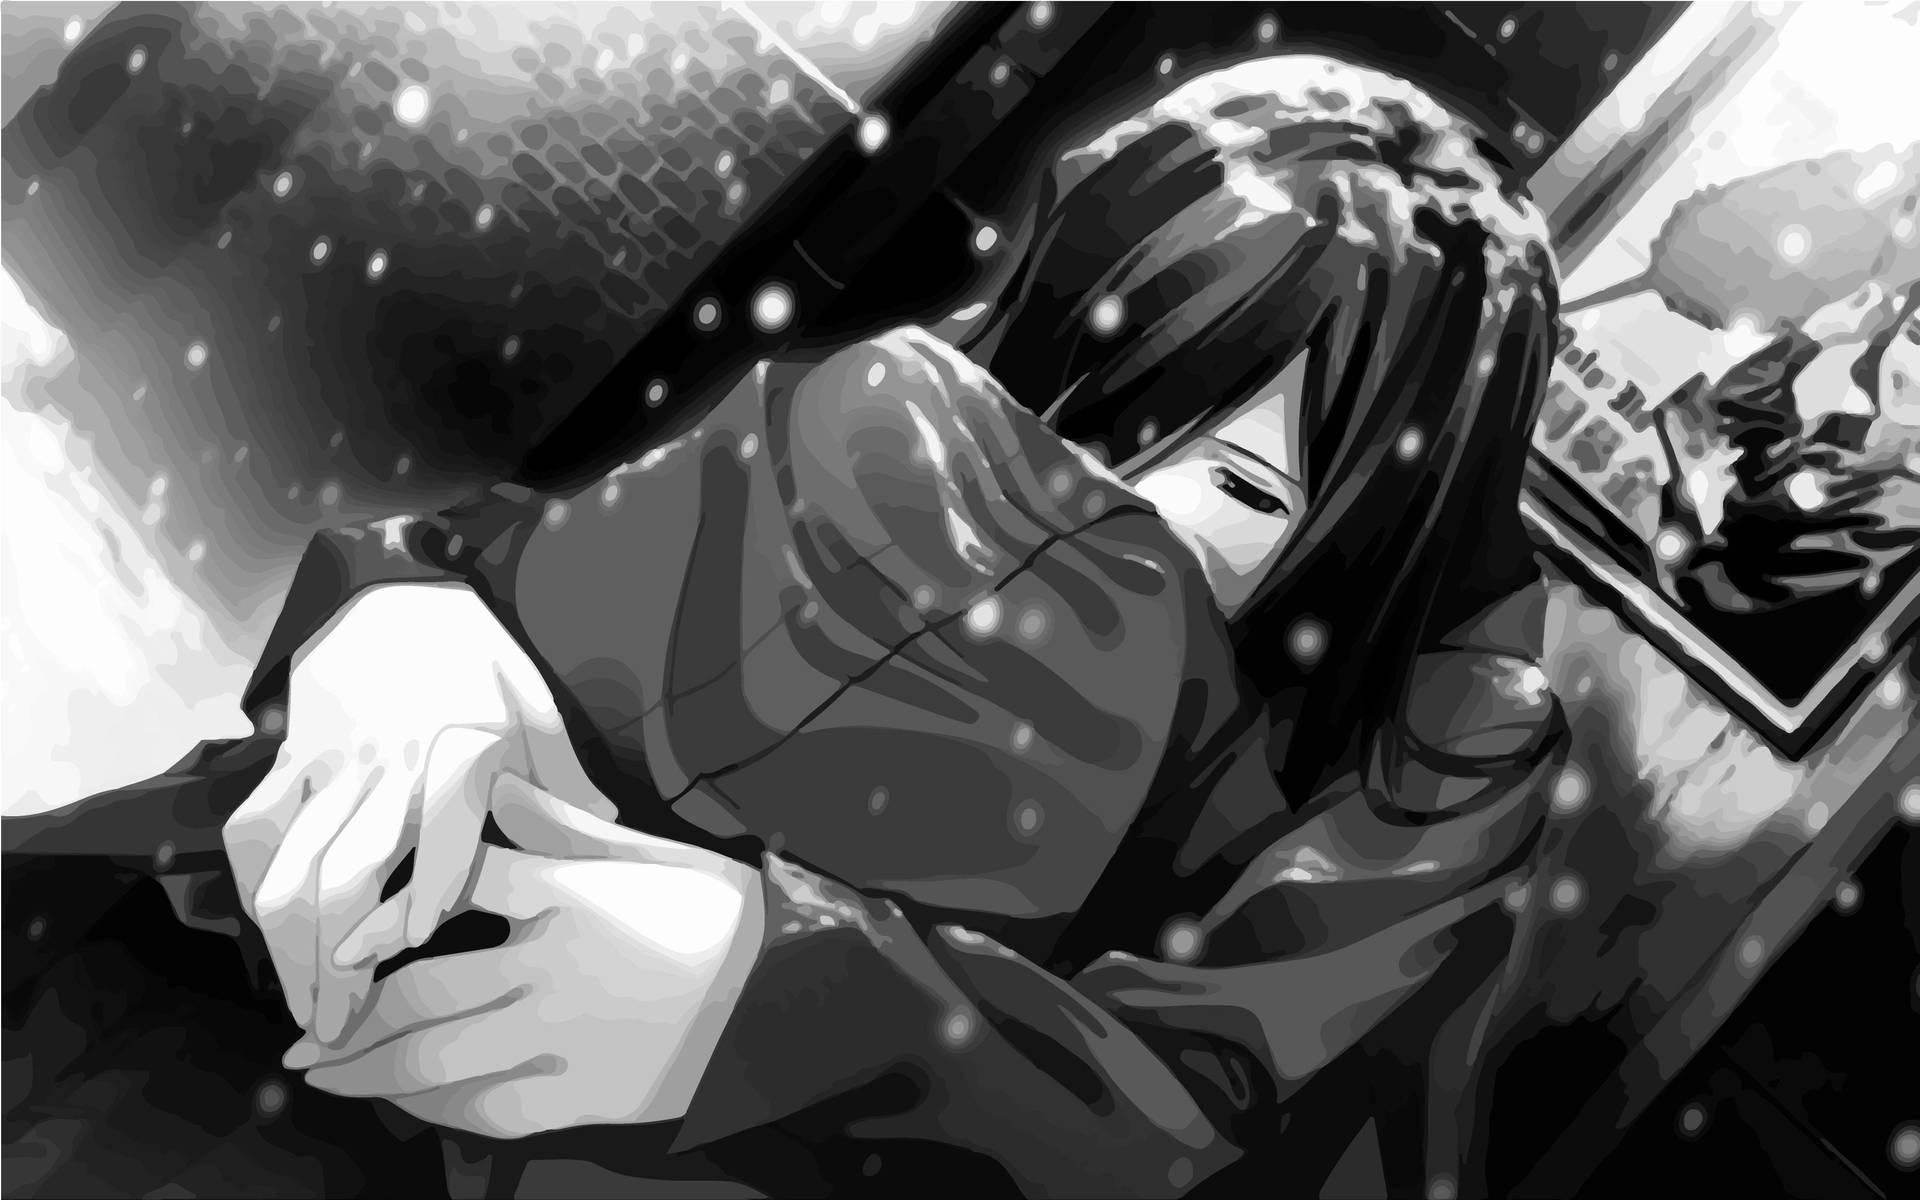 Monochrome Sad Aesthetic Anime Girl In Snow Wallpaper